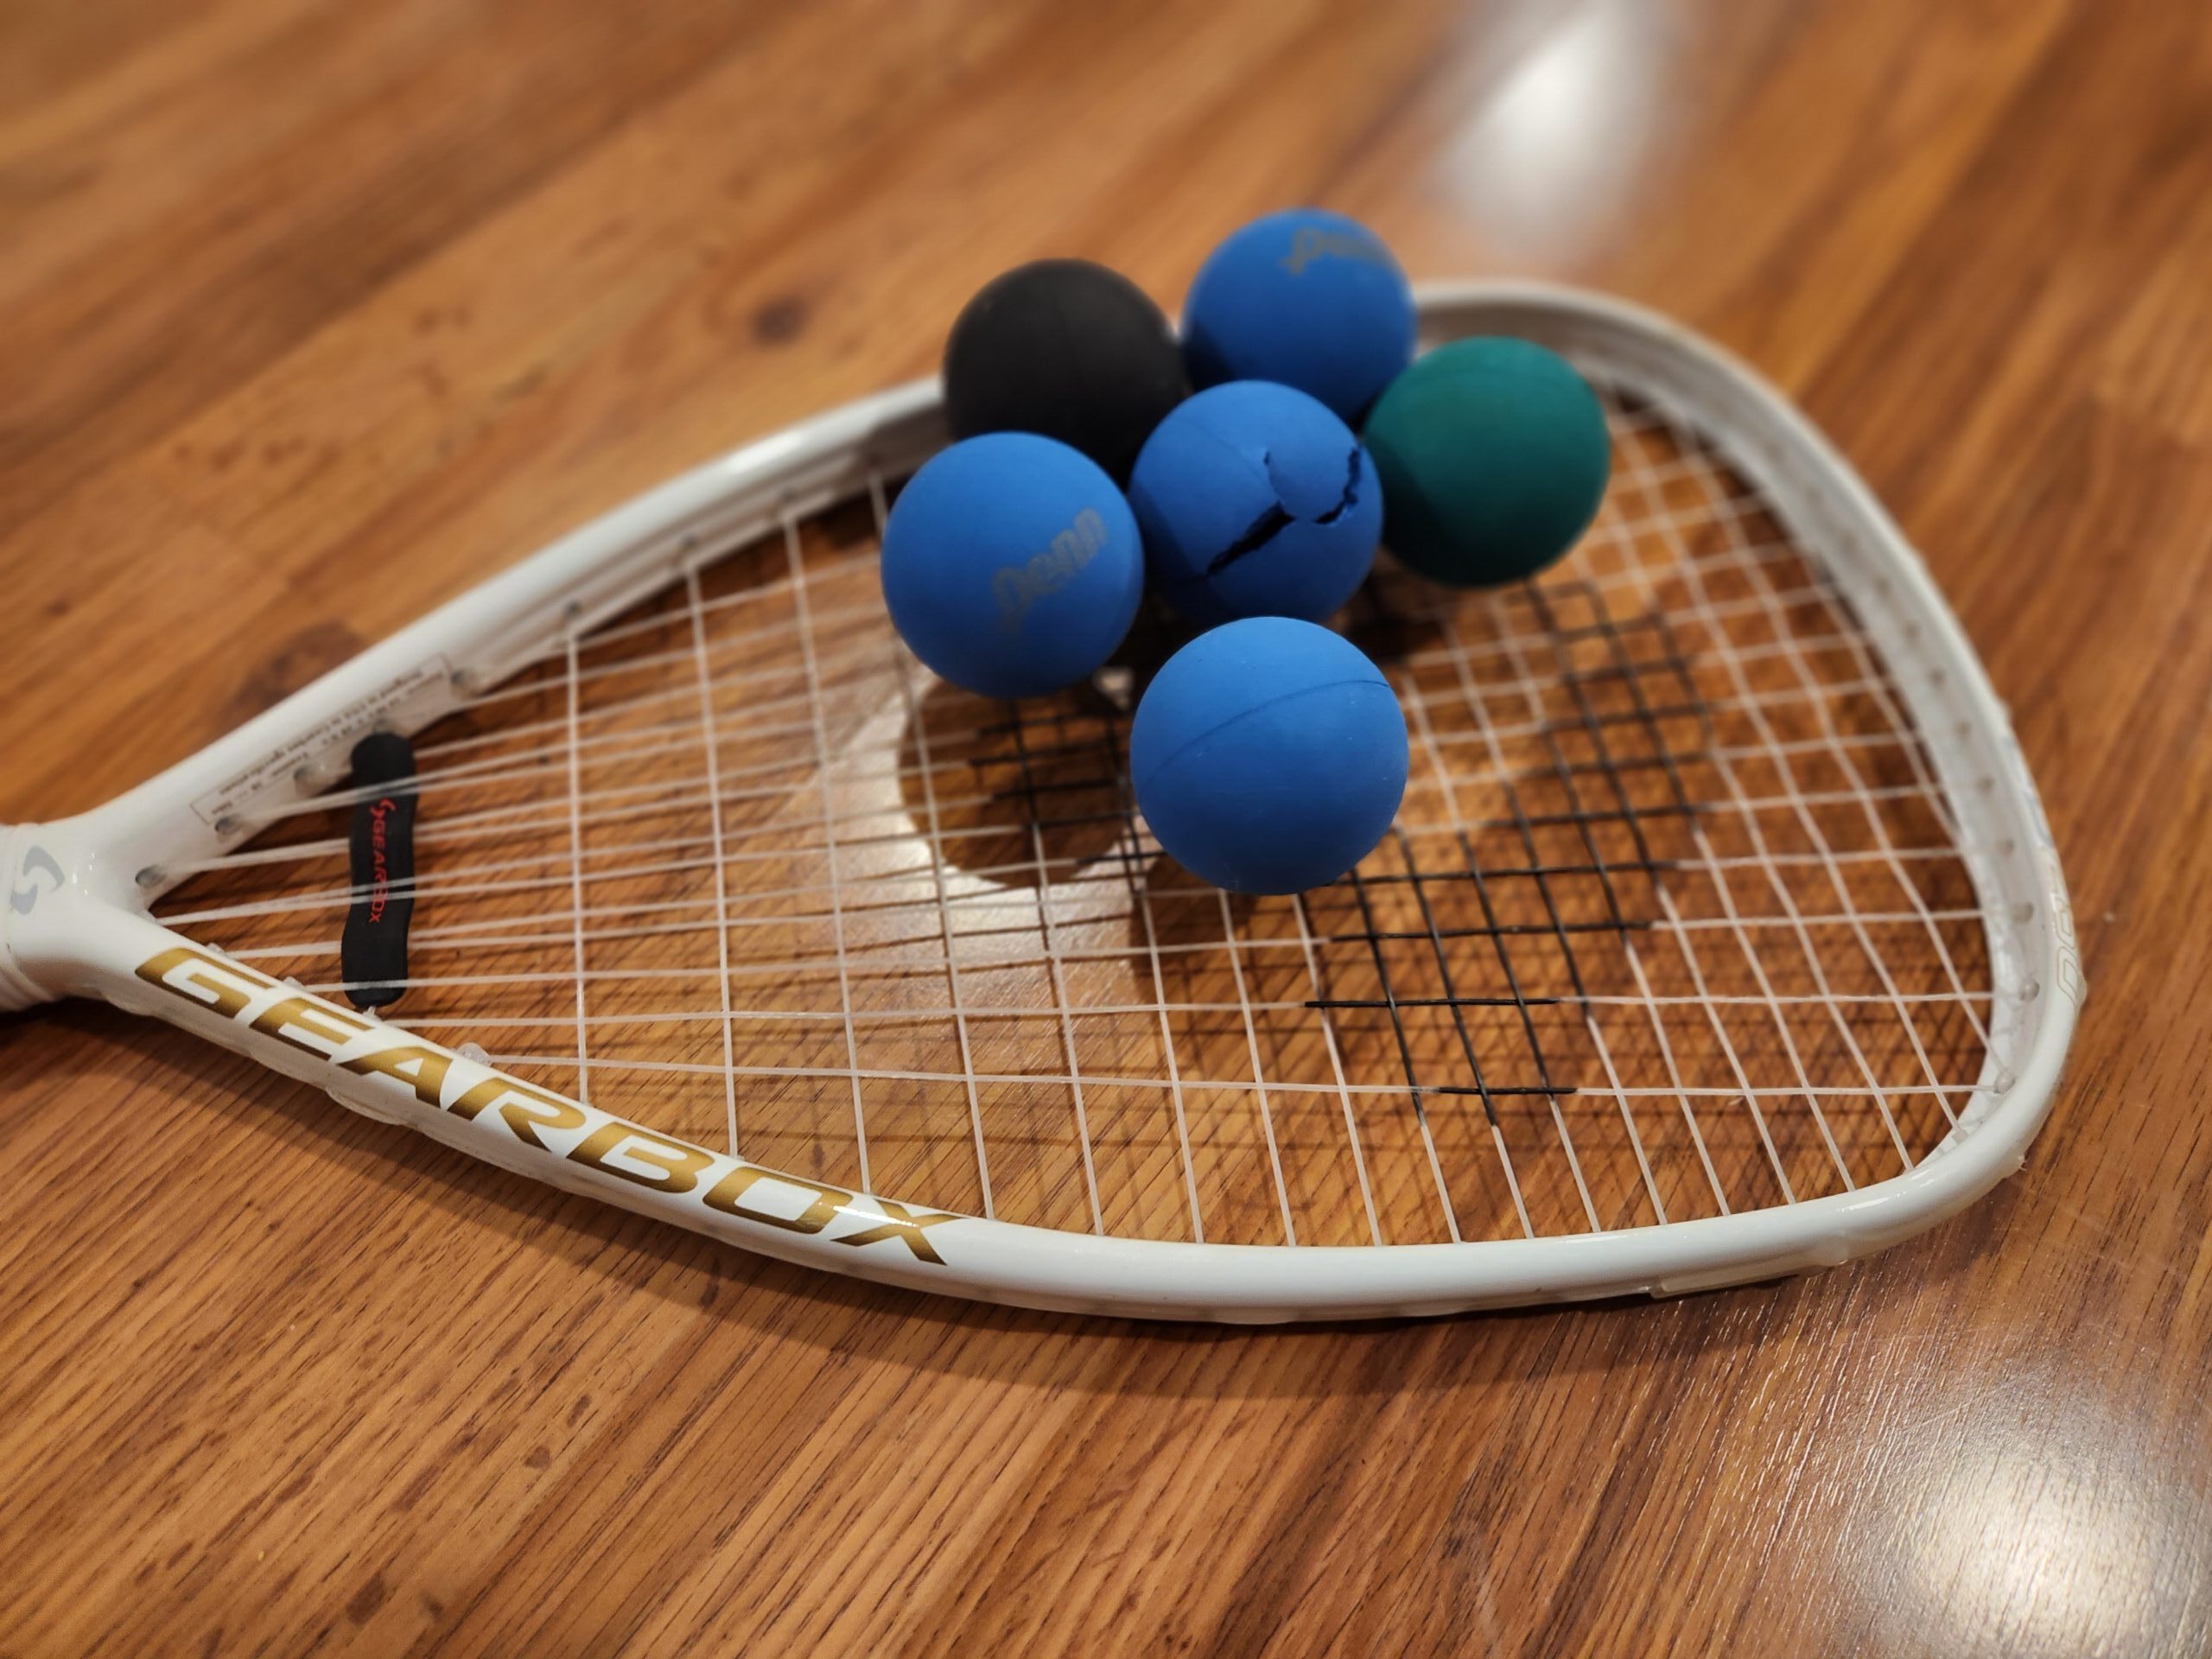 Racquetballs on racquet